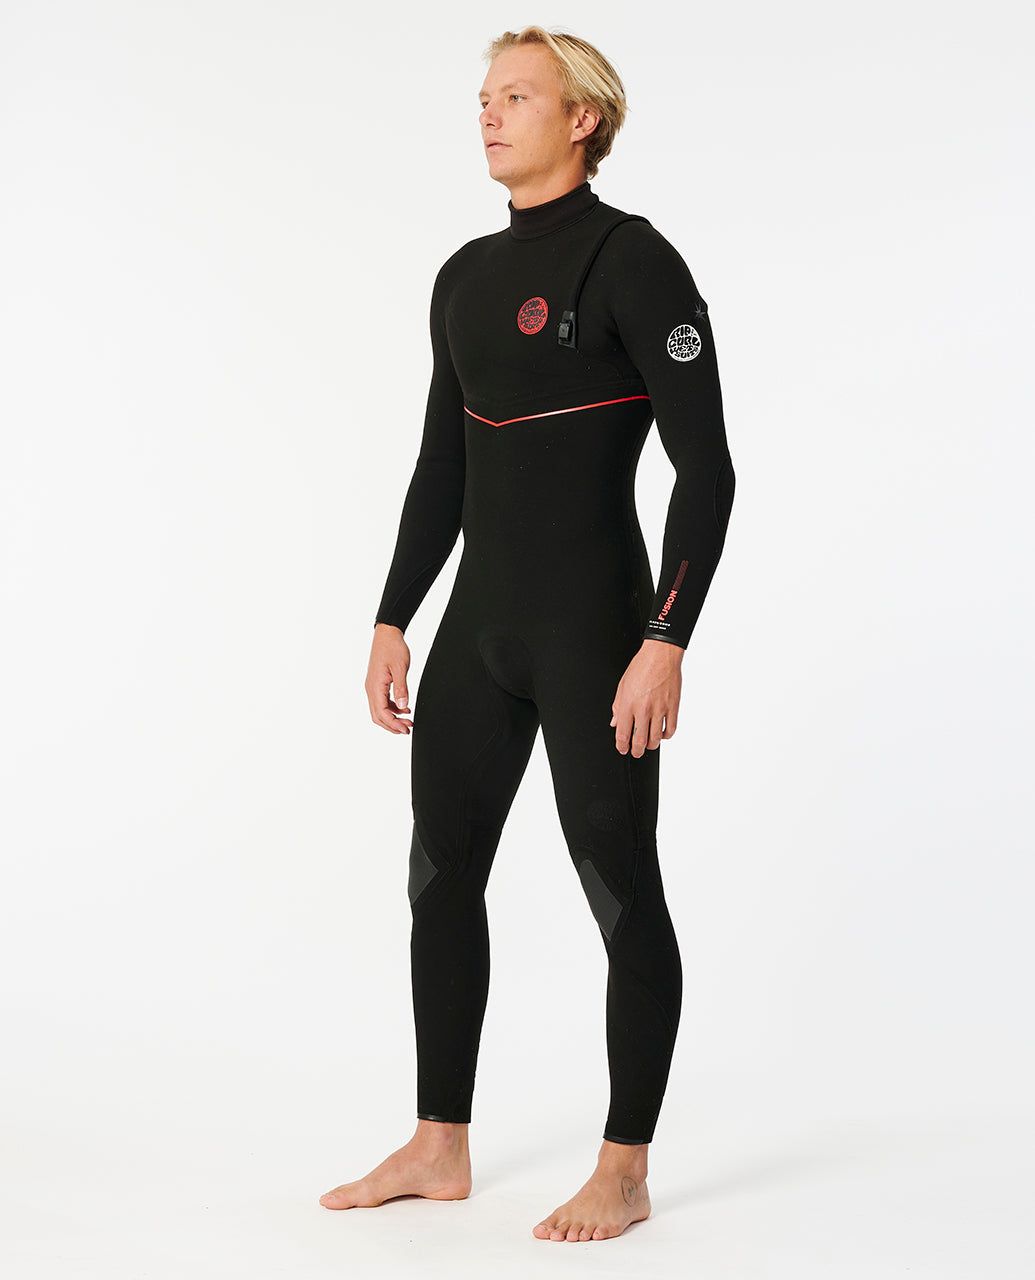 [Spring/Autumn/Winter] Men's F BOMB FUSION 3/2mm zip-free semi-dry wetsuit 